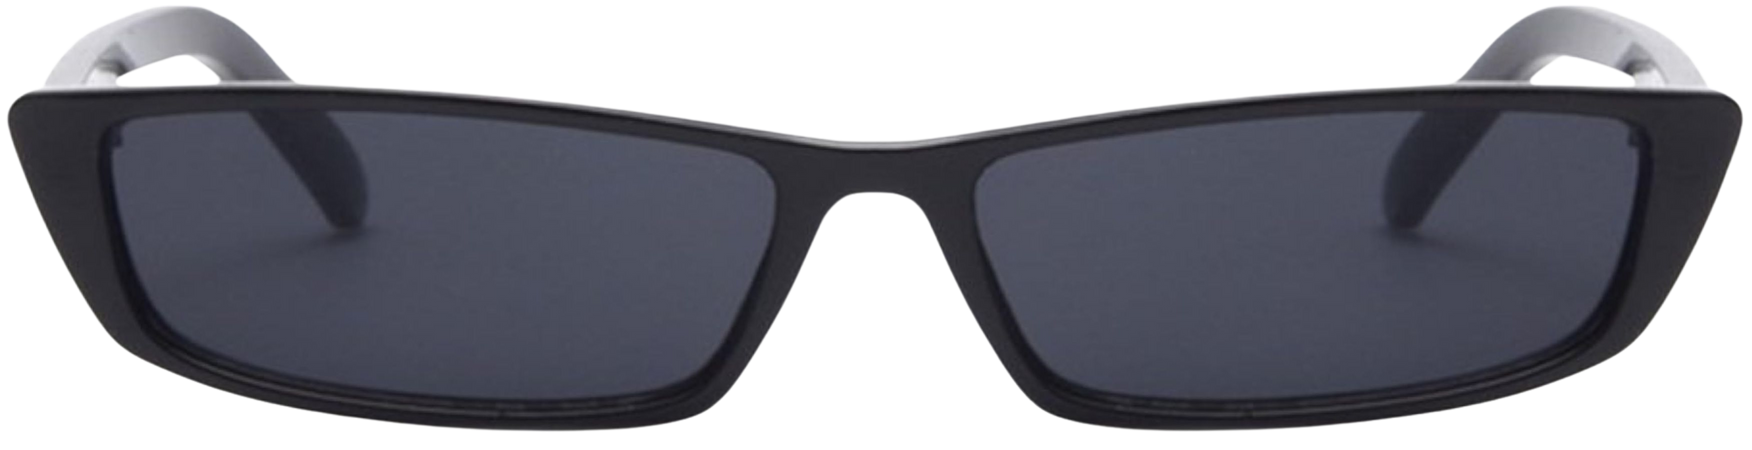 Amazon.com: GOBIGER Rectangle Small Frame Sunglasses Fashion Designer Square Shades for women (Black Frame, Black) : Clothing, Shoes & Jewelry